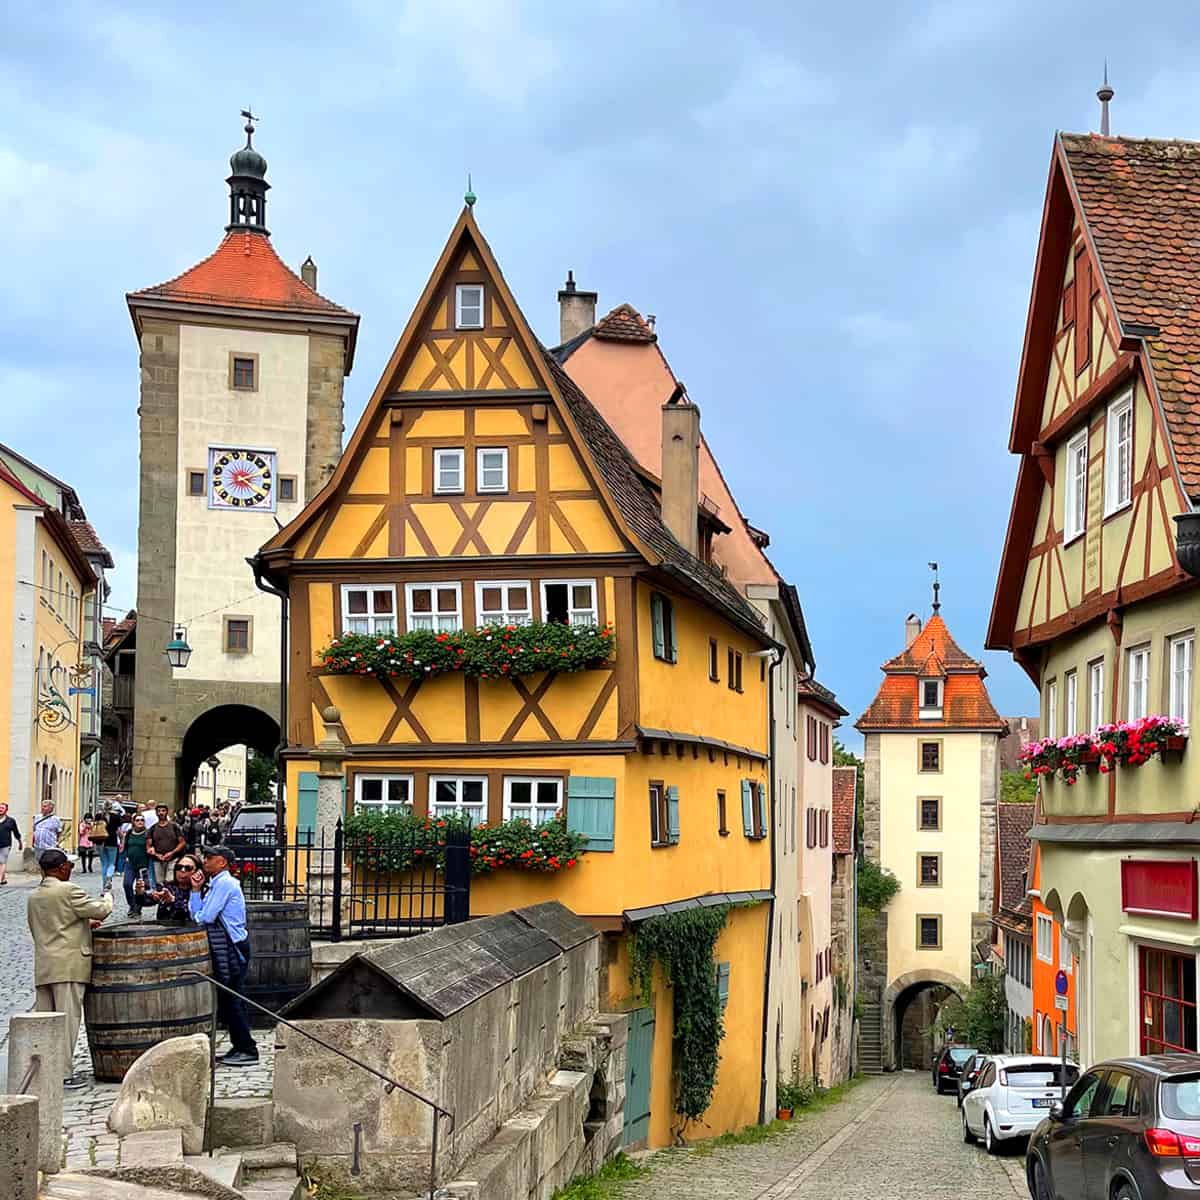 Rothenburg ob der Tauber: Germany's Medieval Fairytale Town